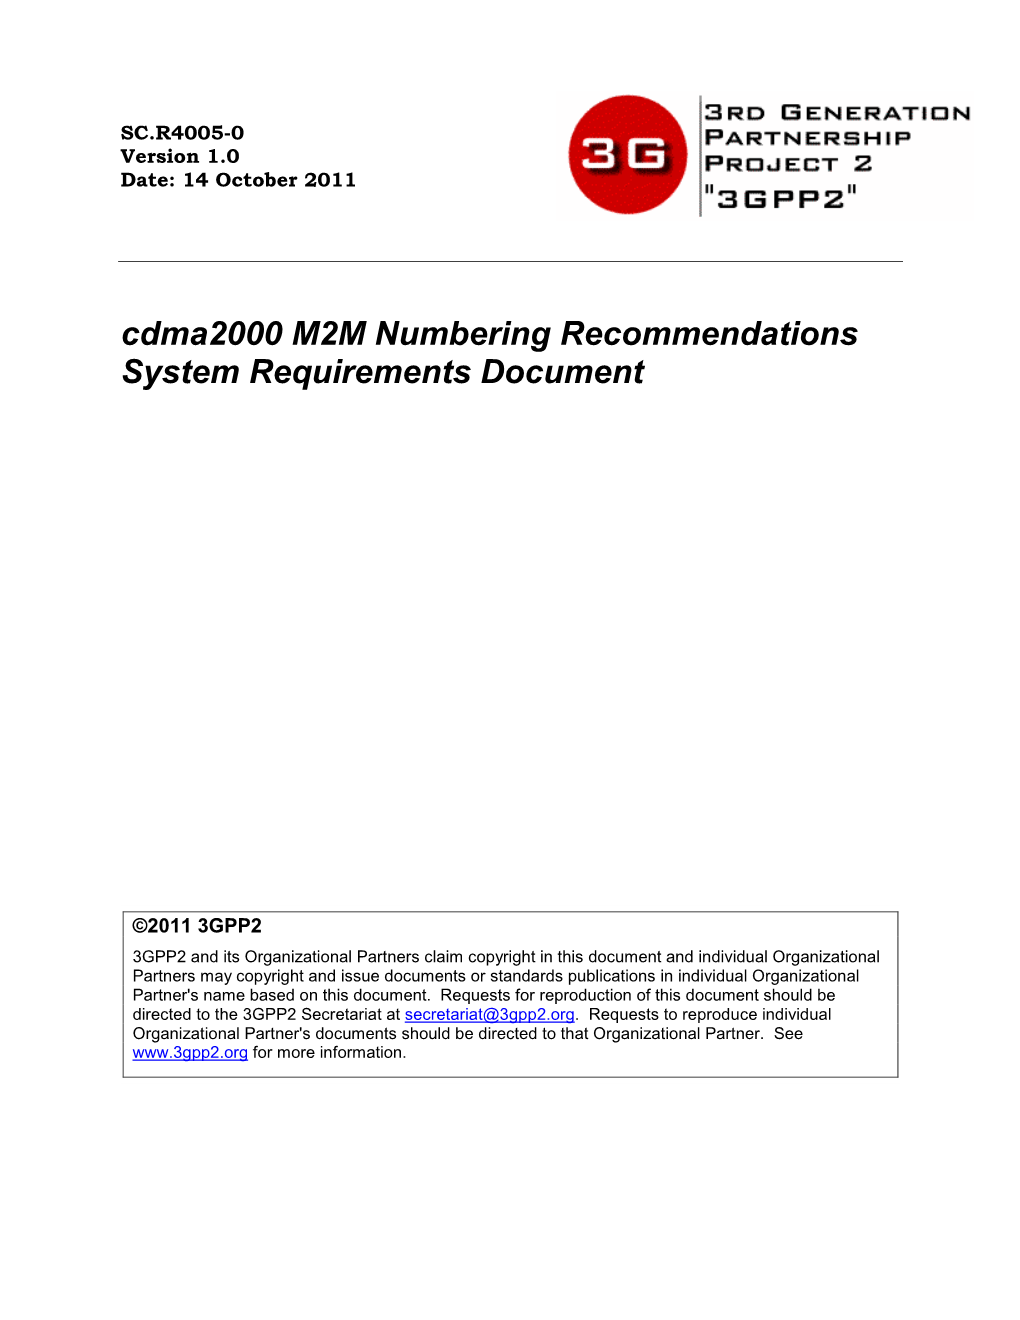 SC.R4005-0 V1.0 Cdma2000 M2M Numbering Recommendations